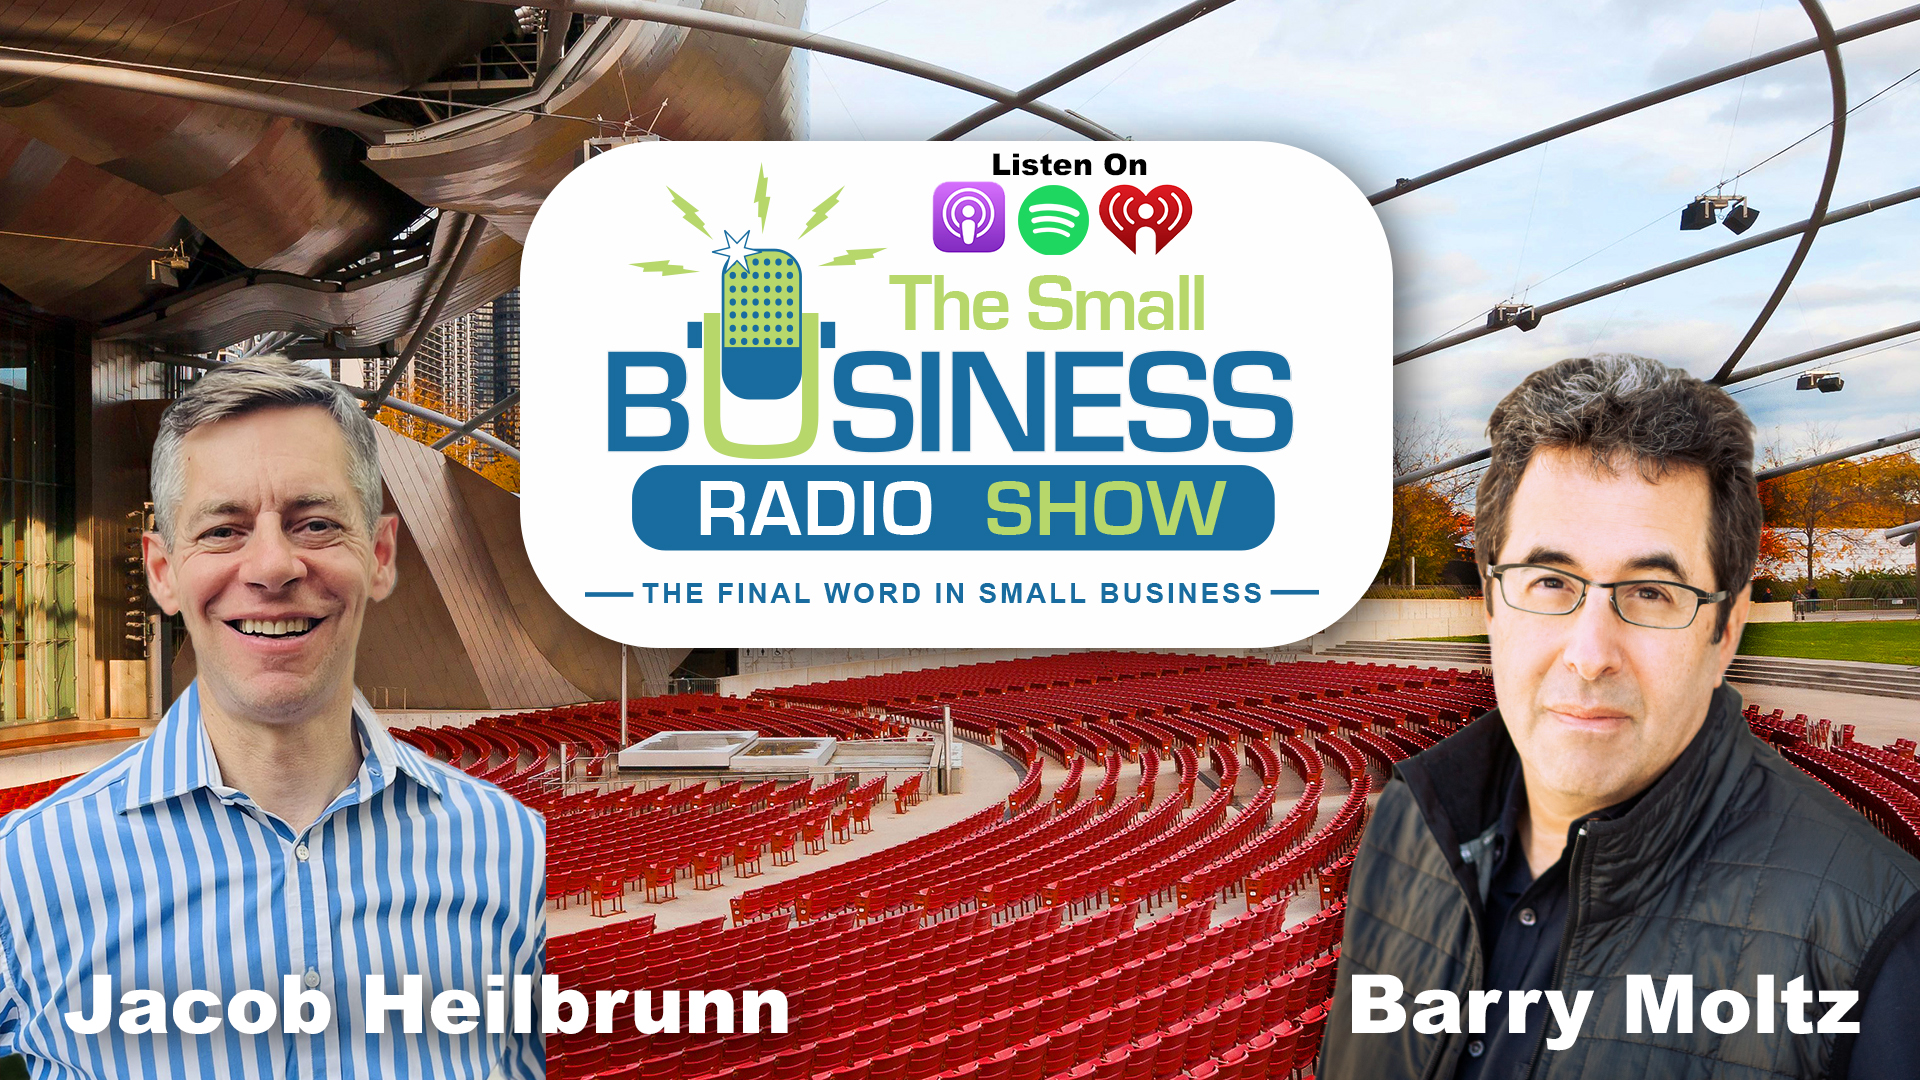 Jacob Heilbrunn on The Small Business Radio Show